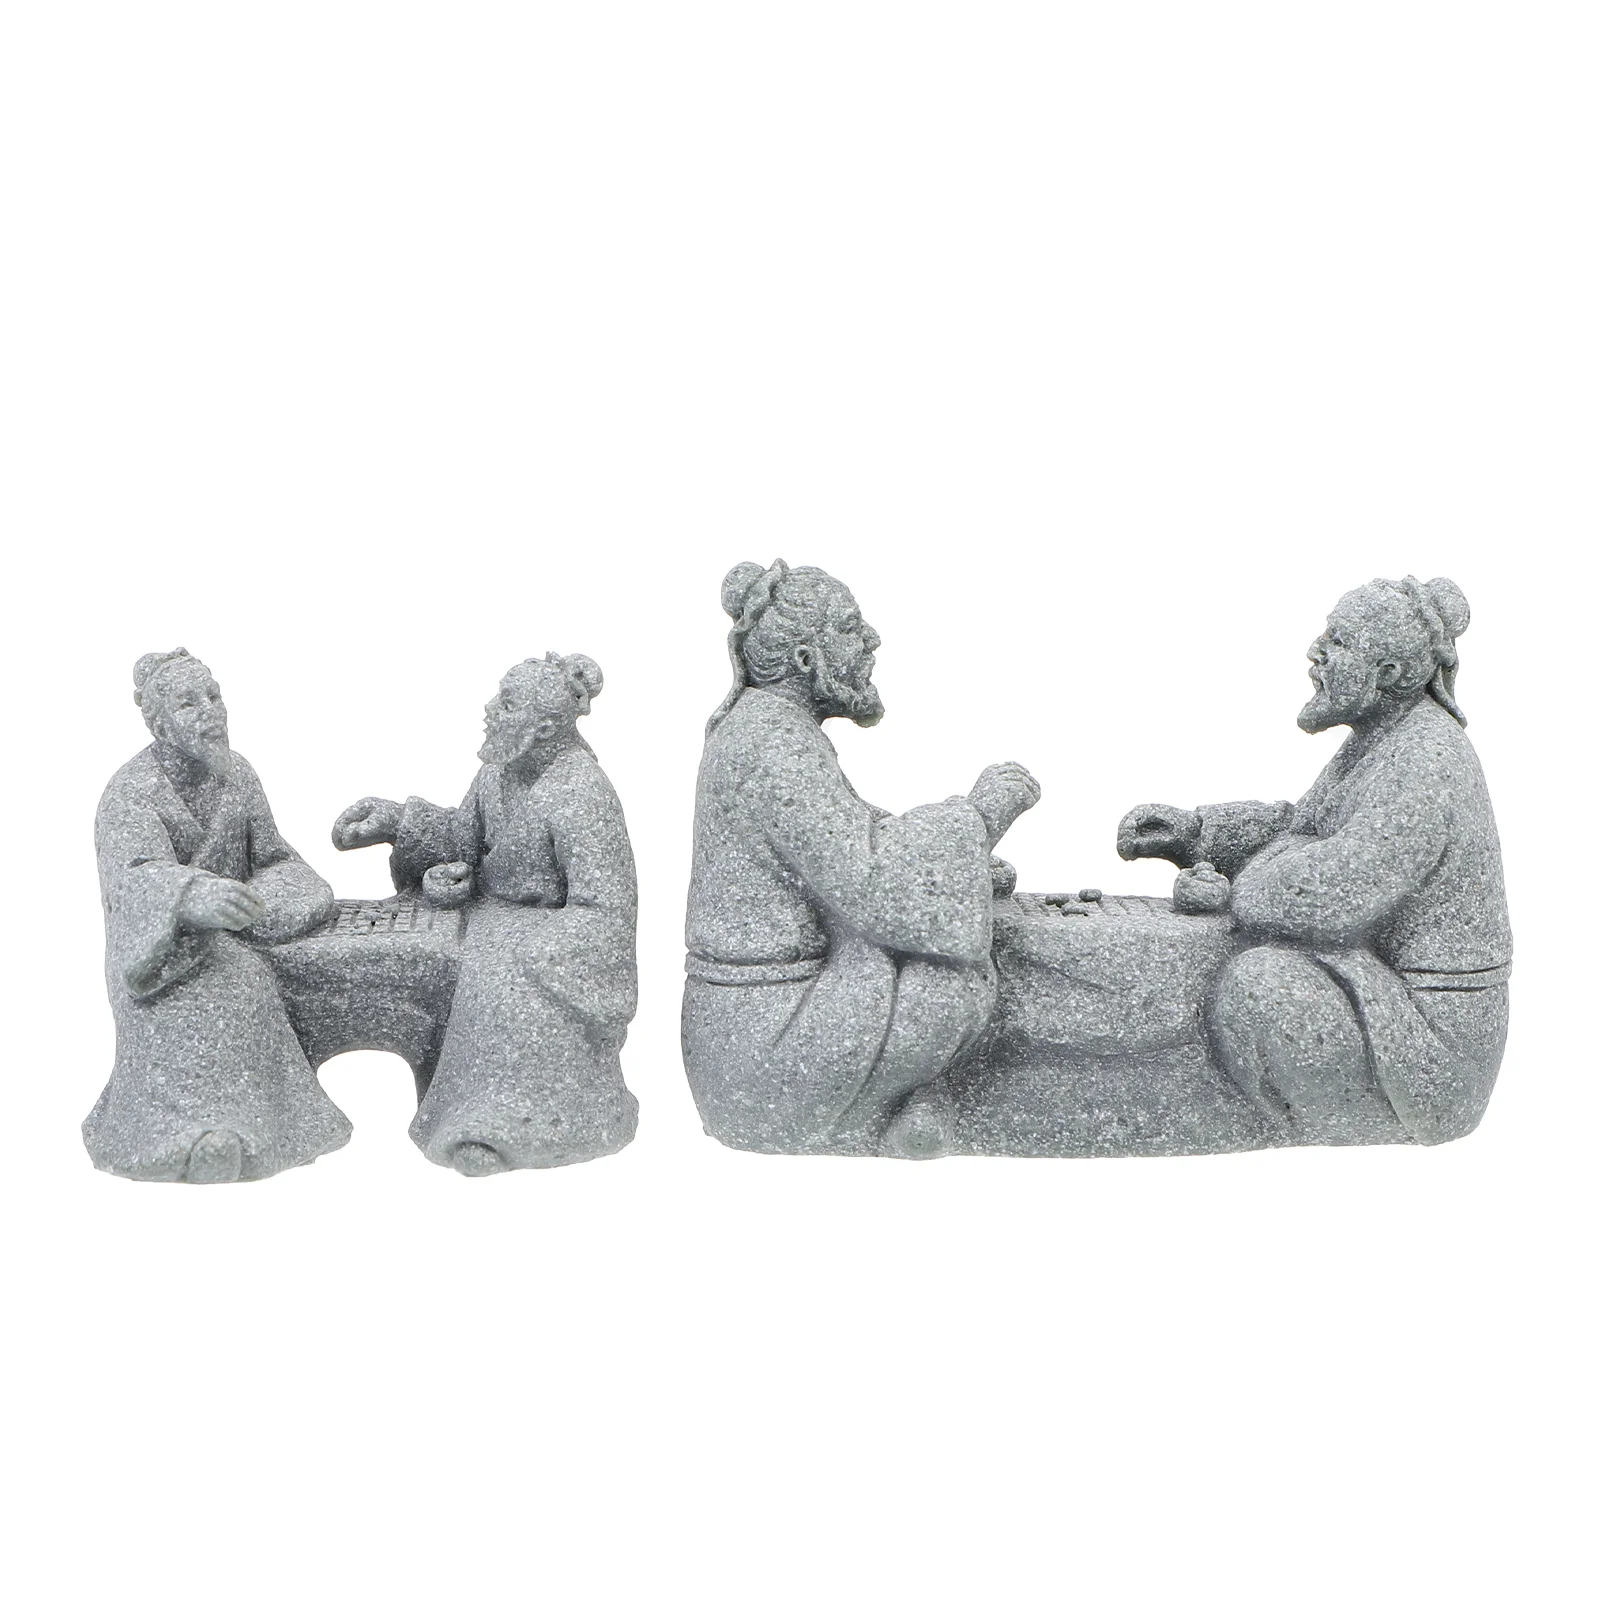 2 Pcs Ceramic Decor Landscape Sandstone Figurine Zen Garden Figurines Mini Cottage House Yoga Statue